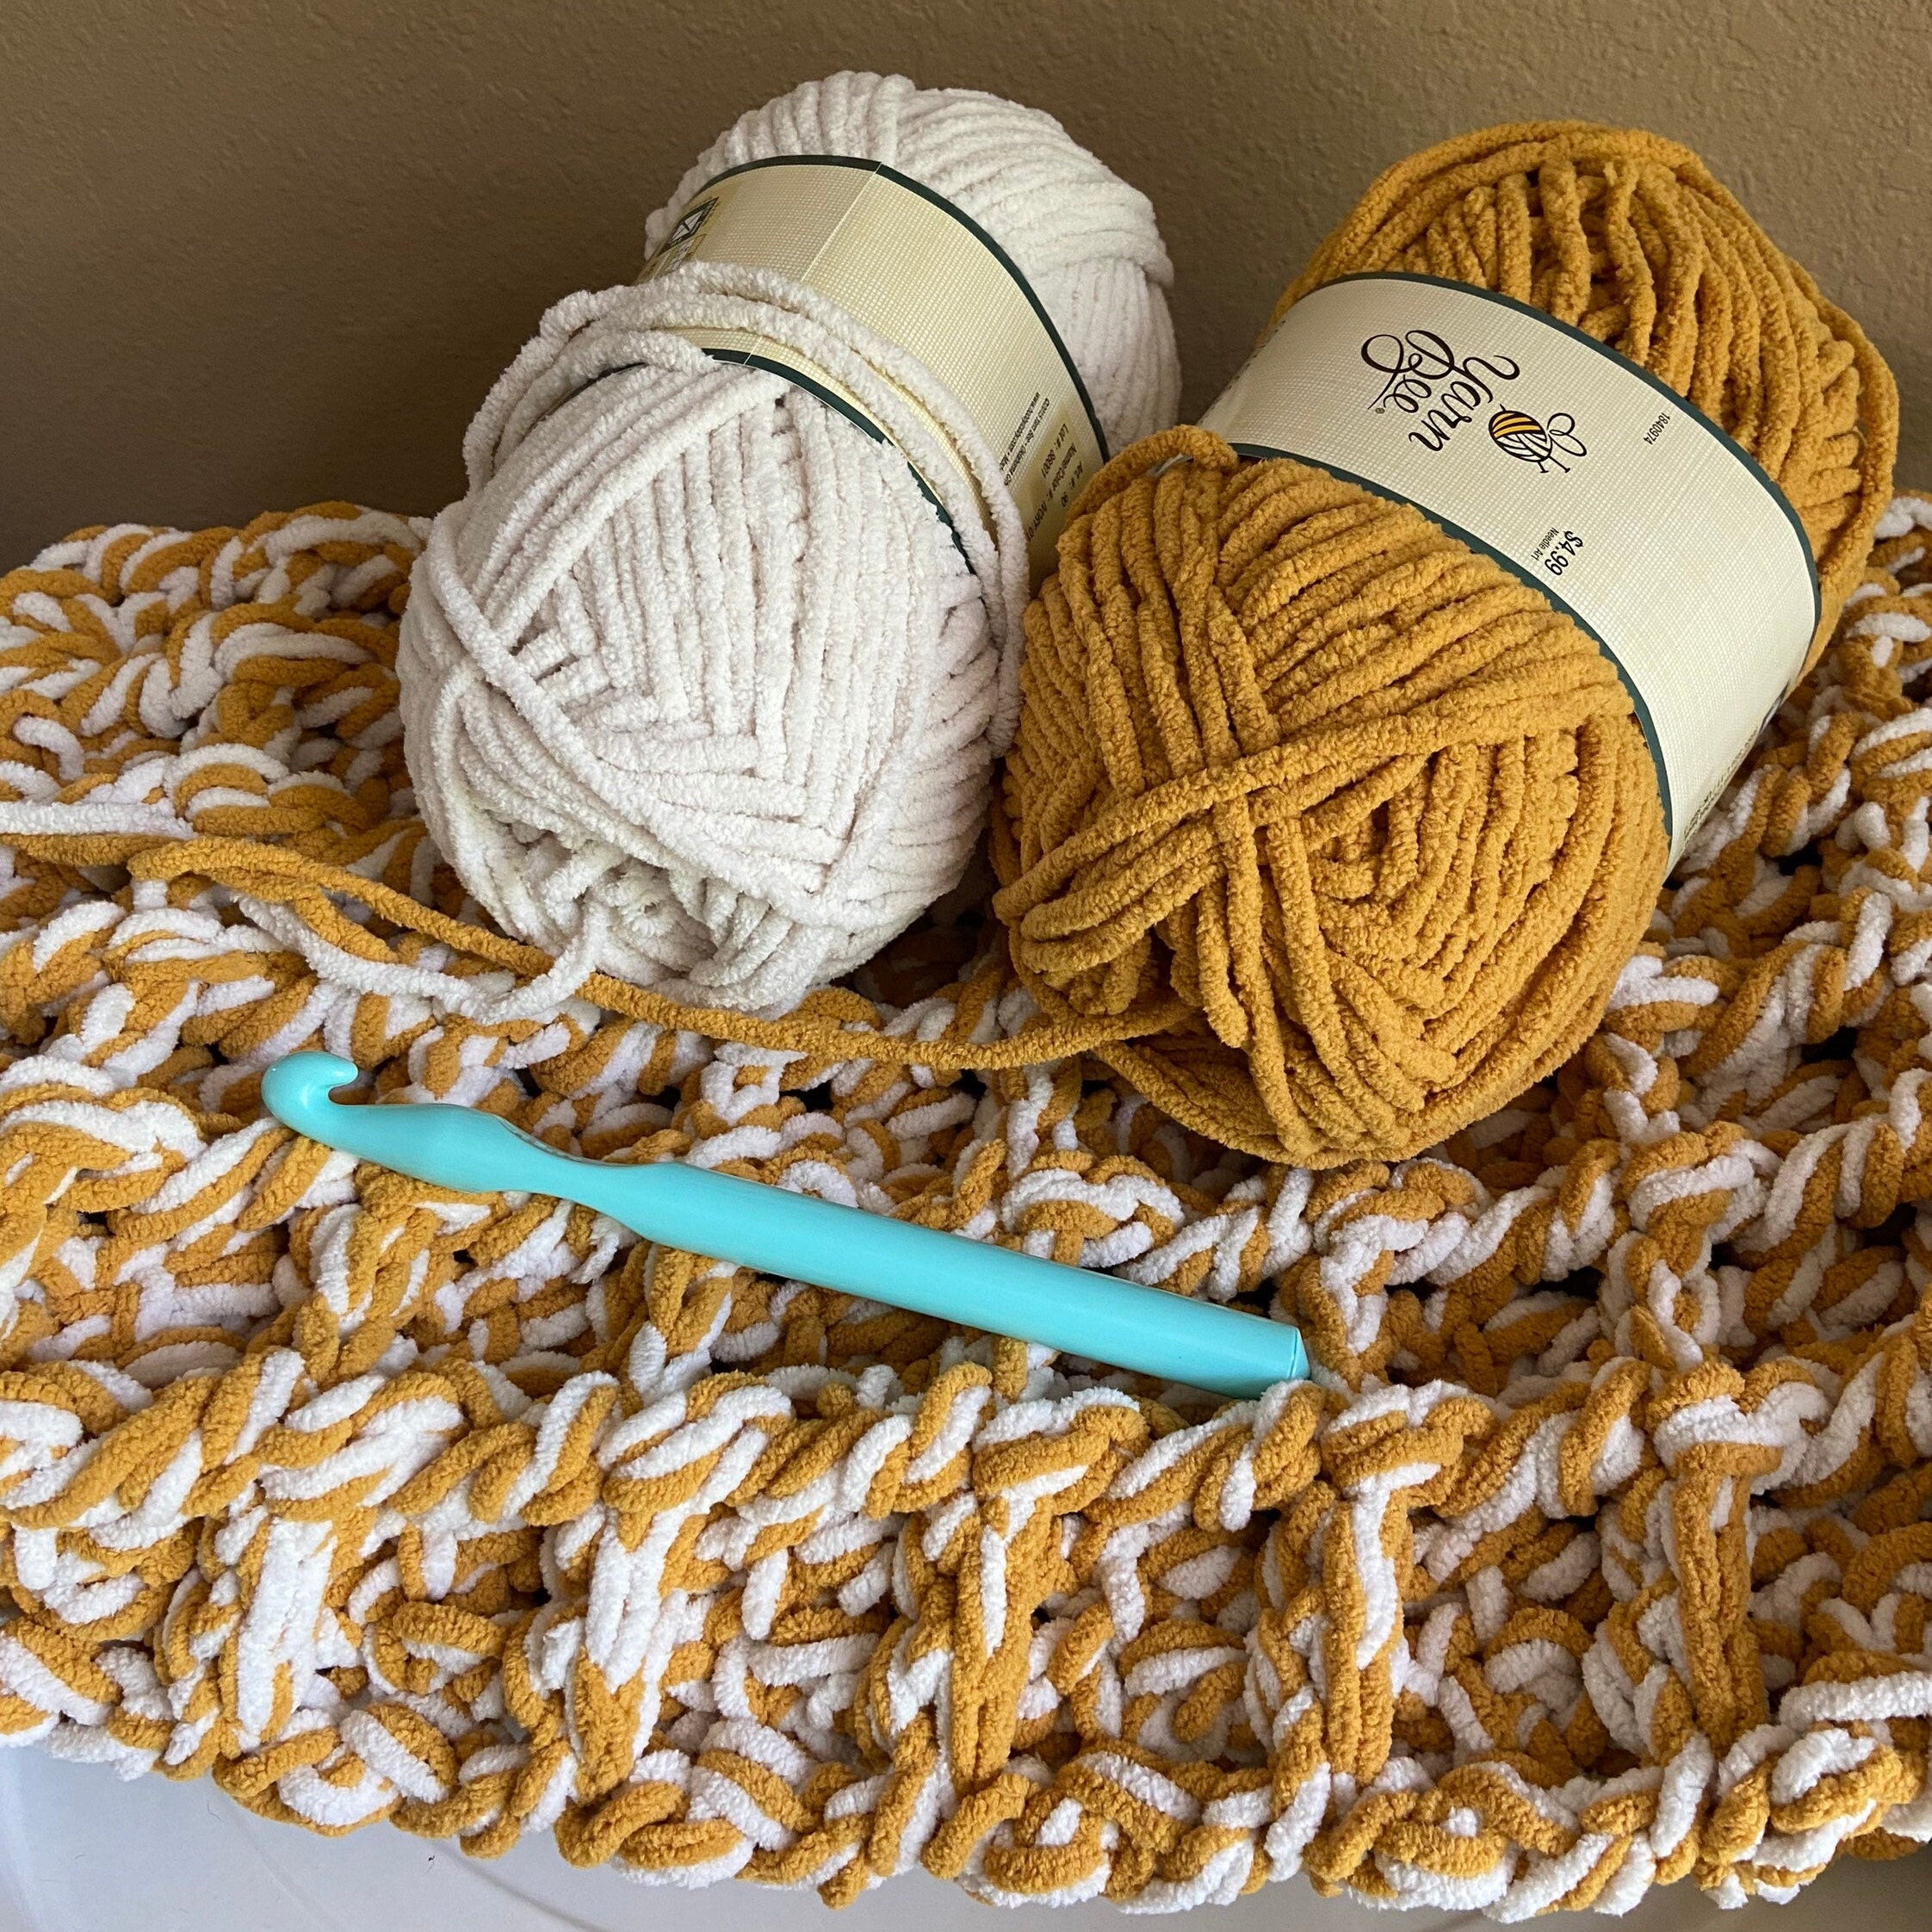 YARN (DISCONTINUED): Lot of 3 skeins (per bag) Hobby Lobby Baby Bee Hu –  Crochet by Jennifer